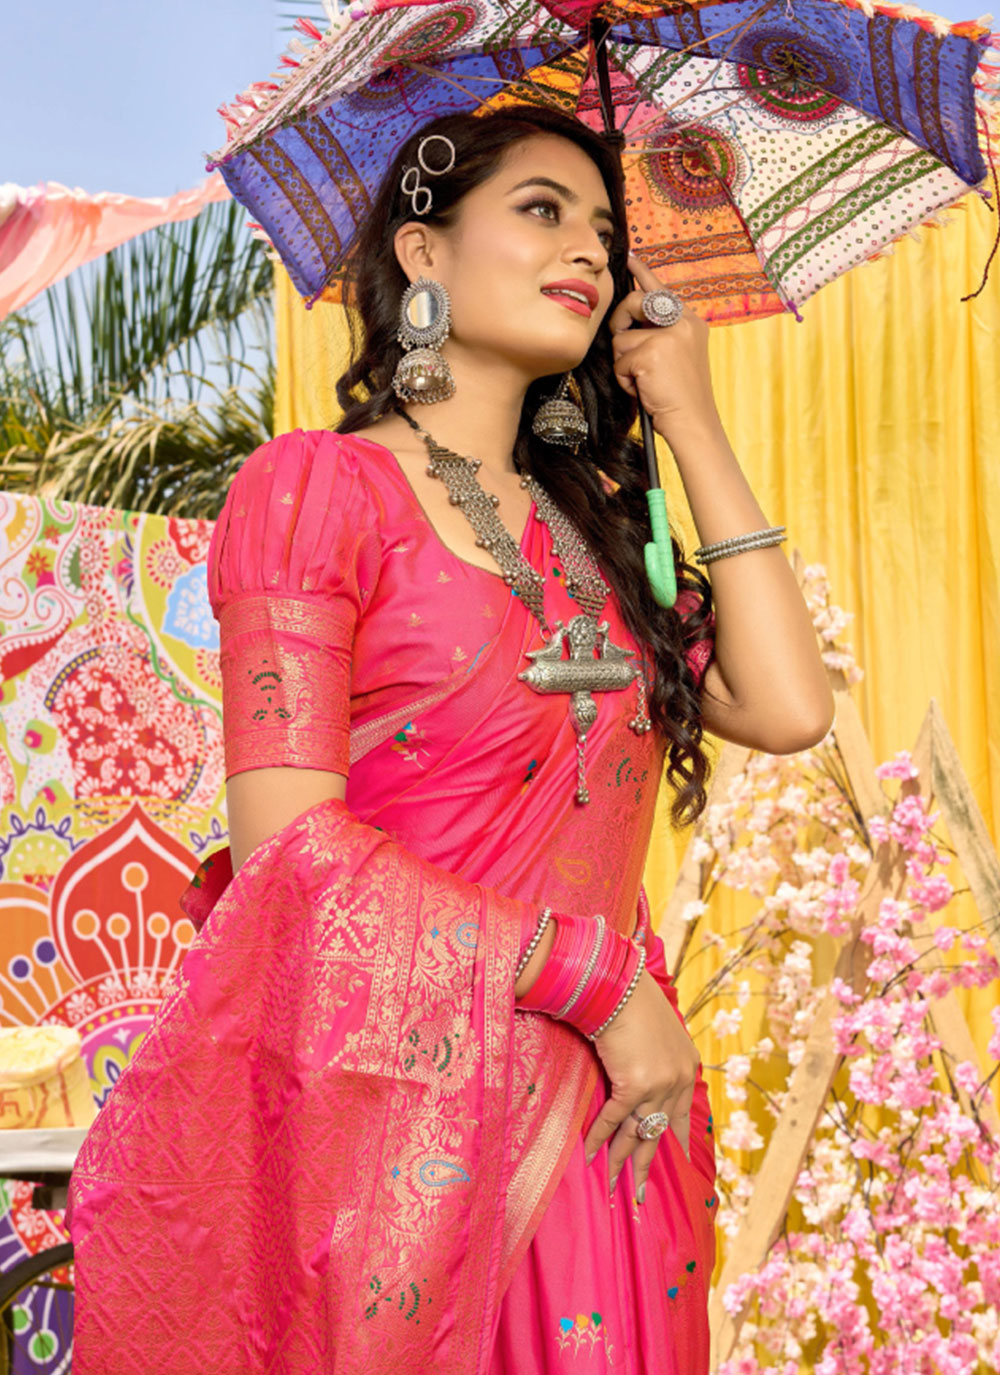 Pink Silk Woven Work Classic Sari